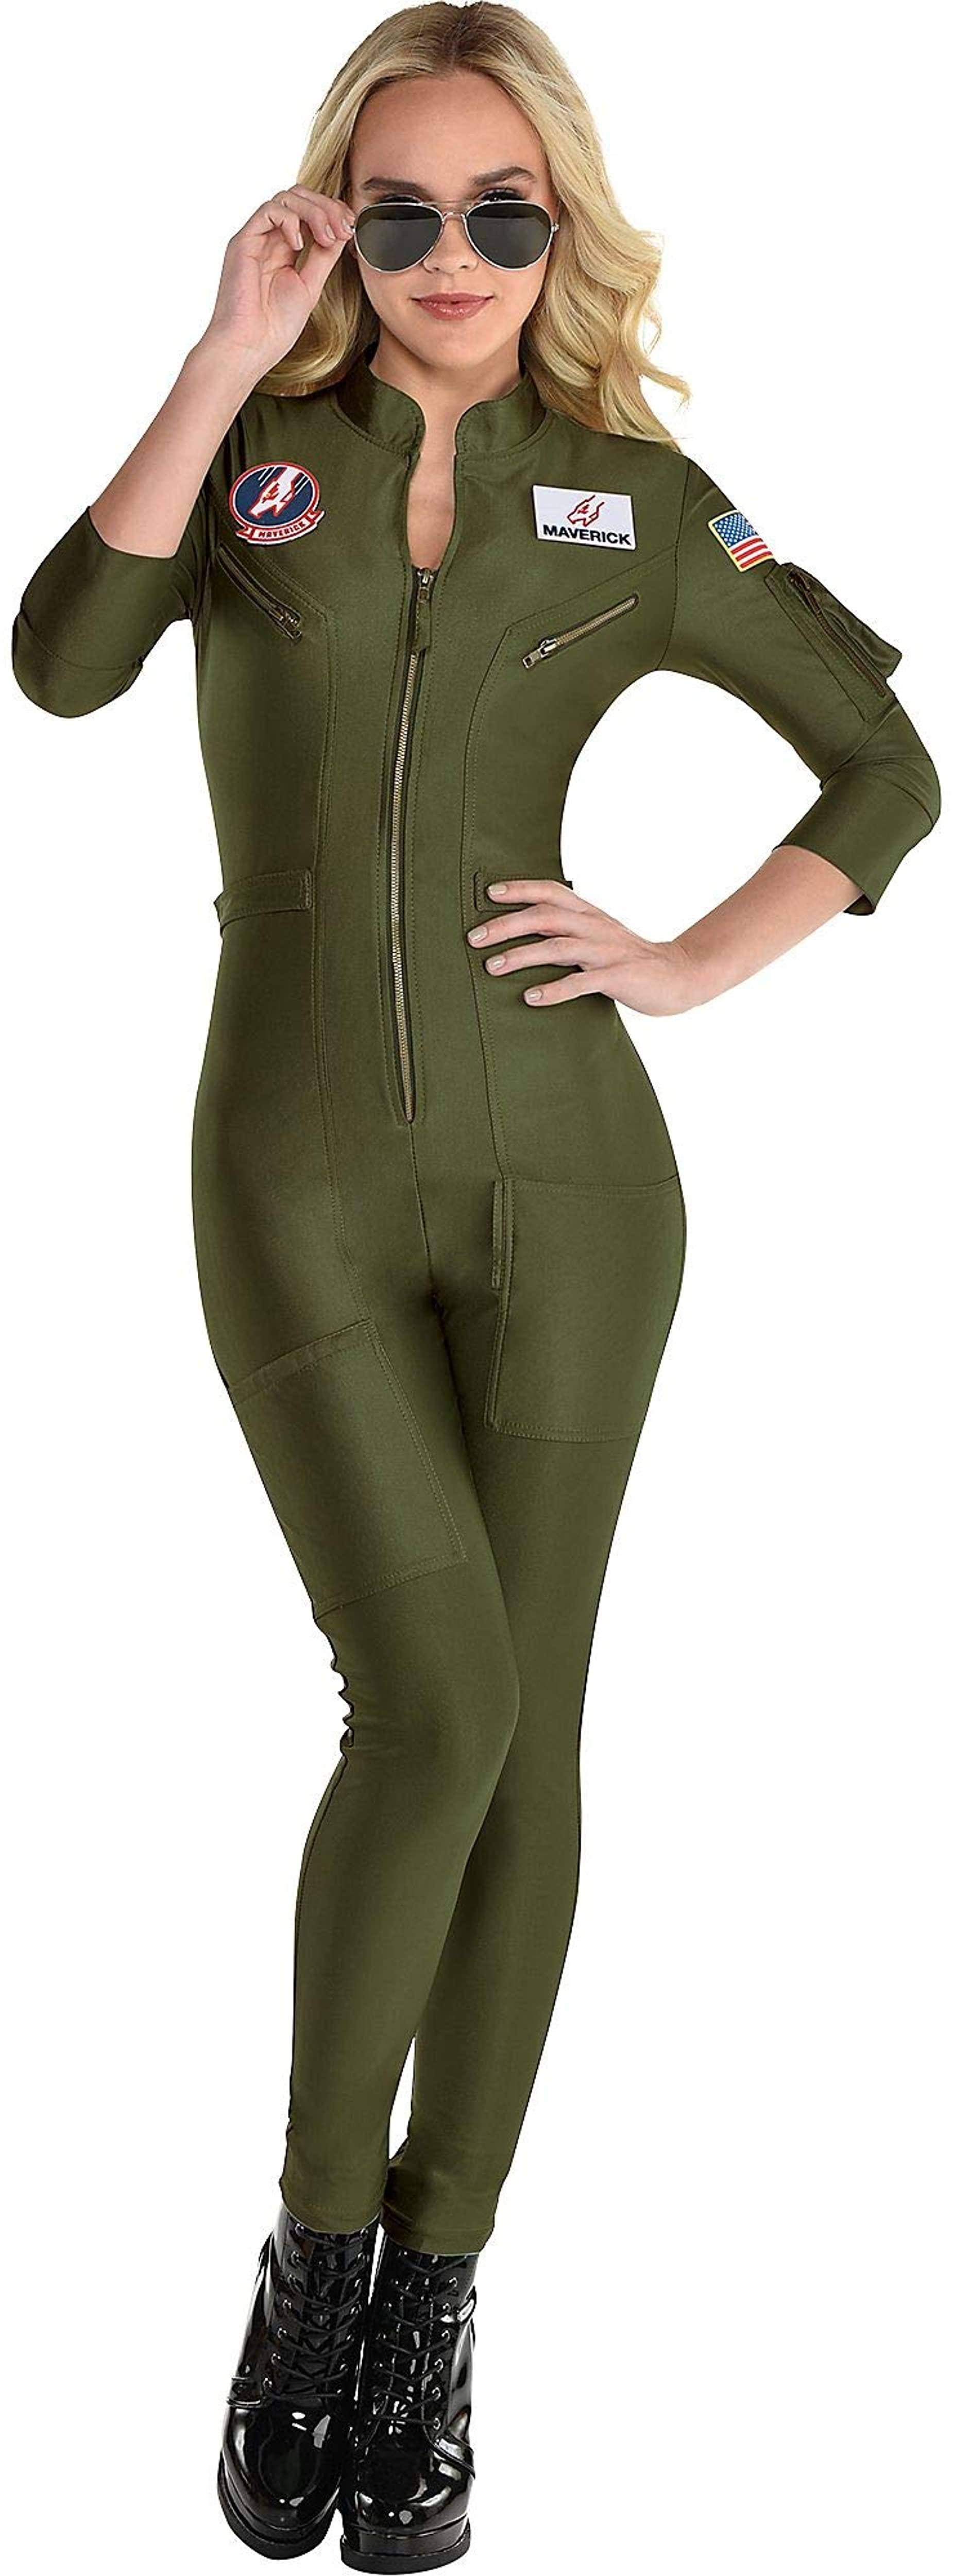 Amscan Top gun: maverick adult womens flight suit costume § large